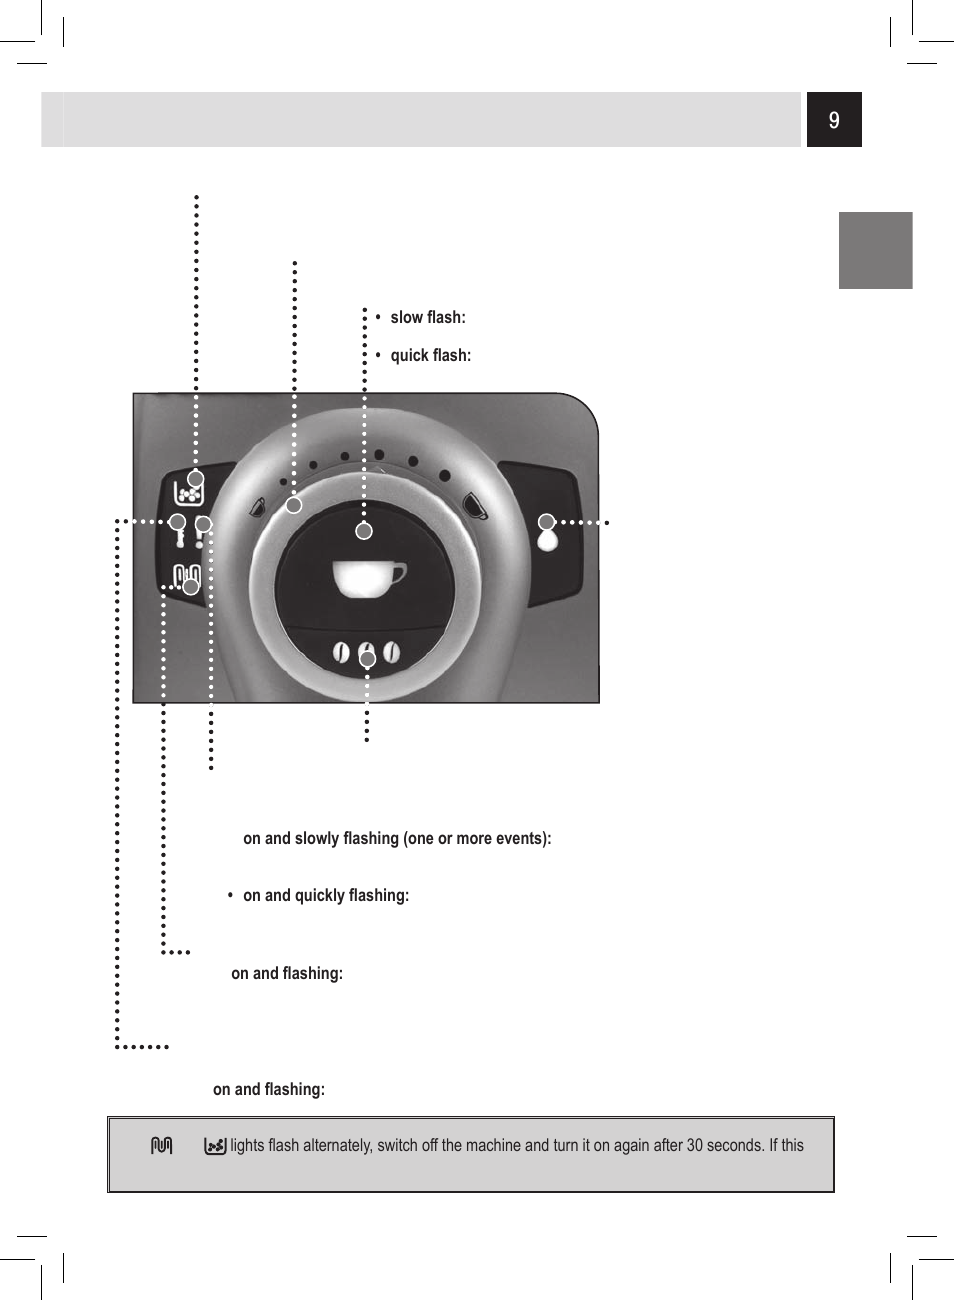 Control panel | Philips Saeco Odea Giro User Manual | Page 9 / 22